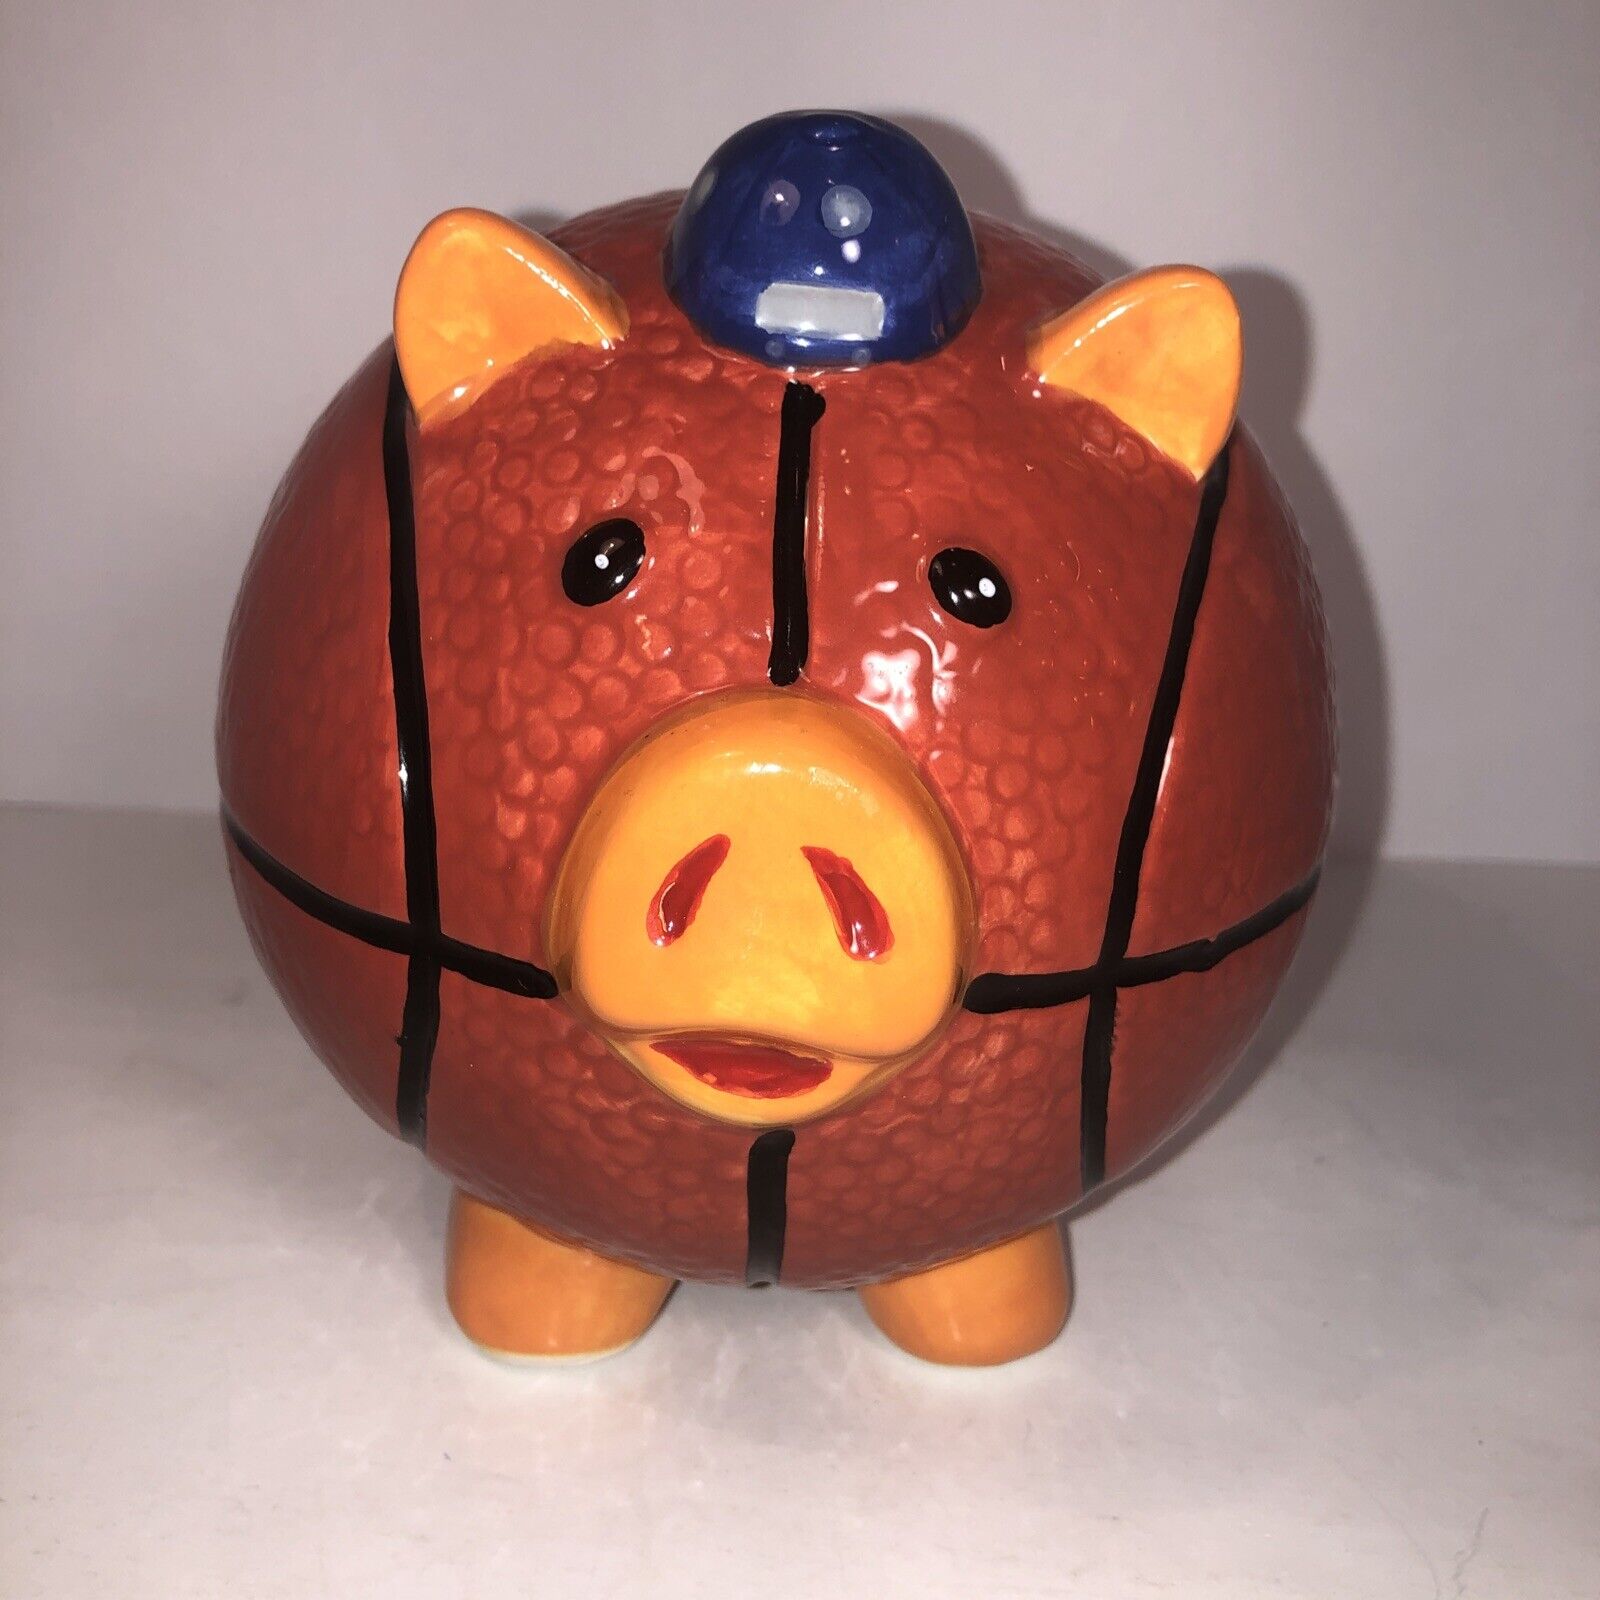 Orange Basketball Shaped Piggy Bank Porcelain Ceramic Boy Gifts 5x5x5.5 Inches